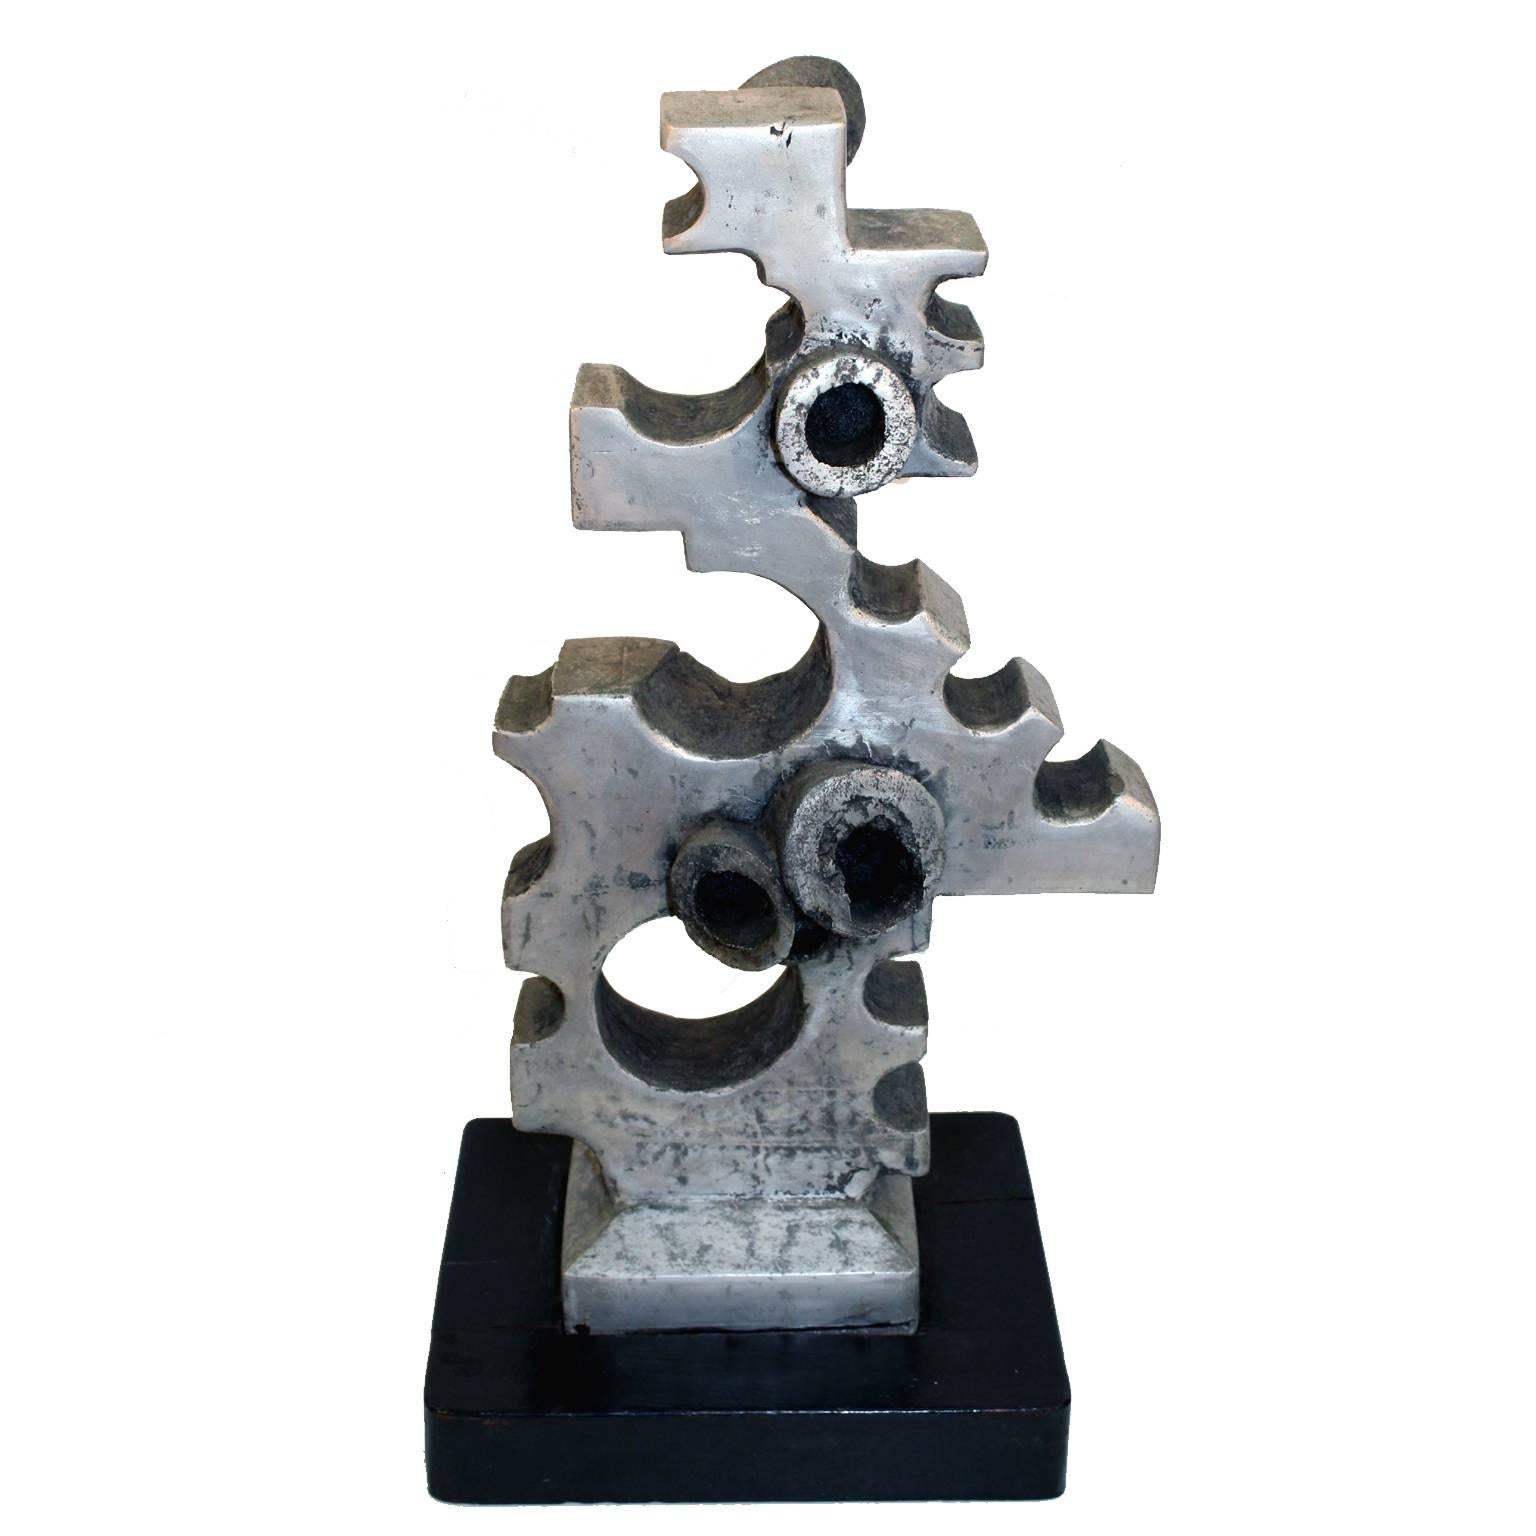 Aluminiumguss-Skulptur aus dem Maschinenzeitalter